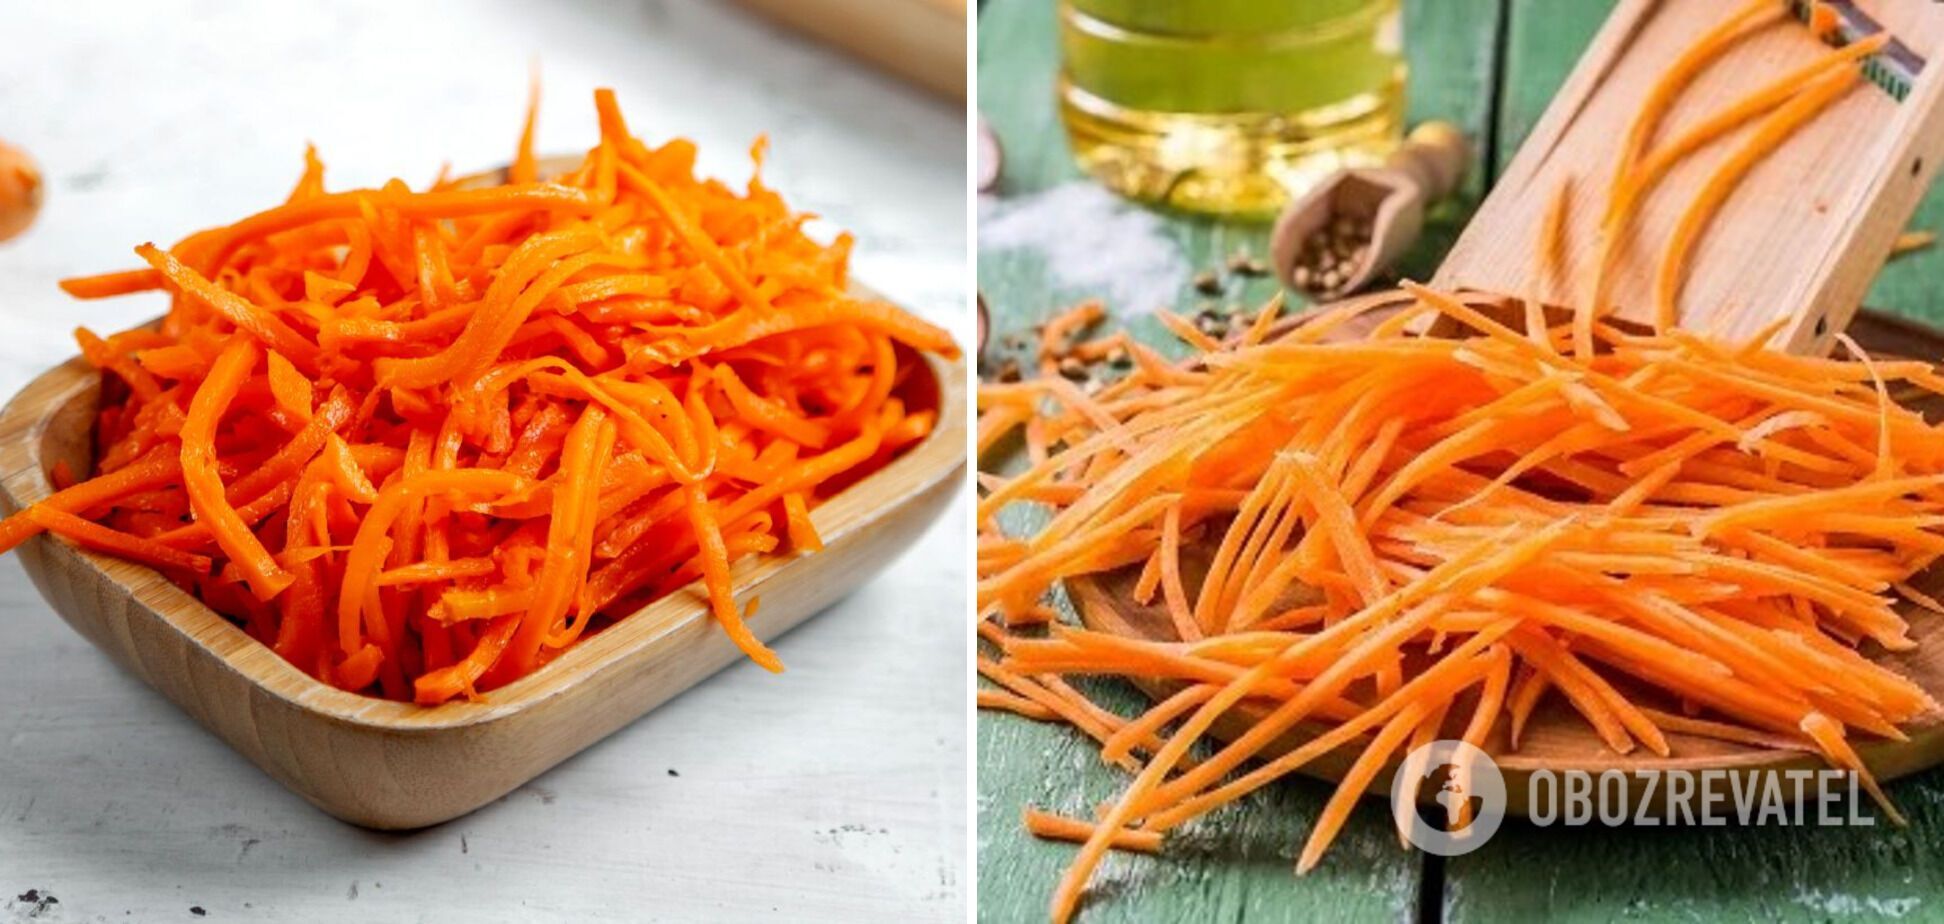 Korean carrots